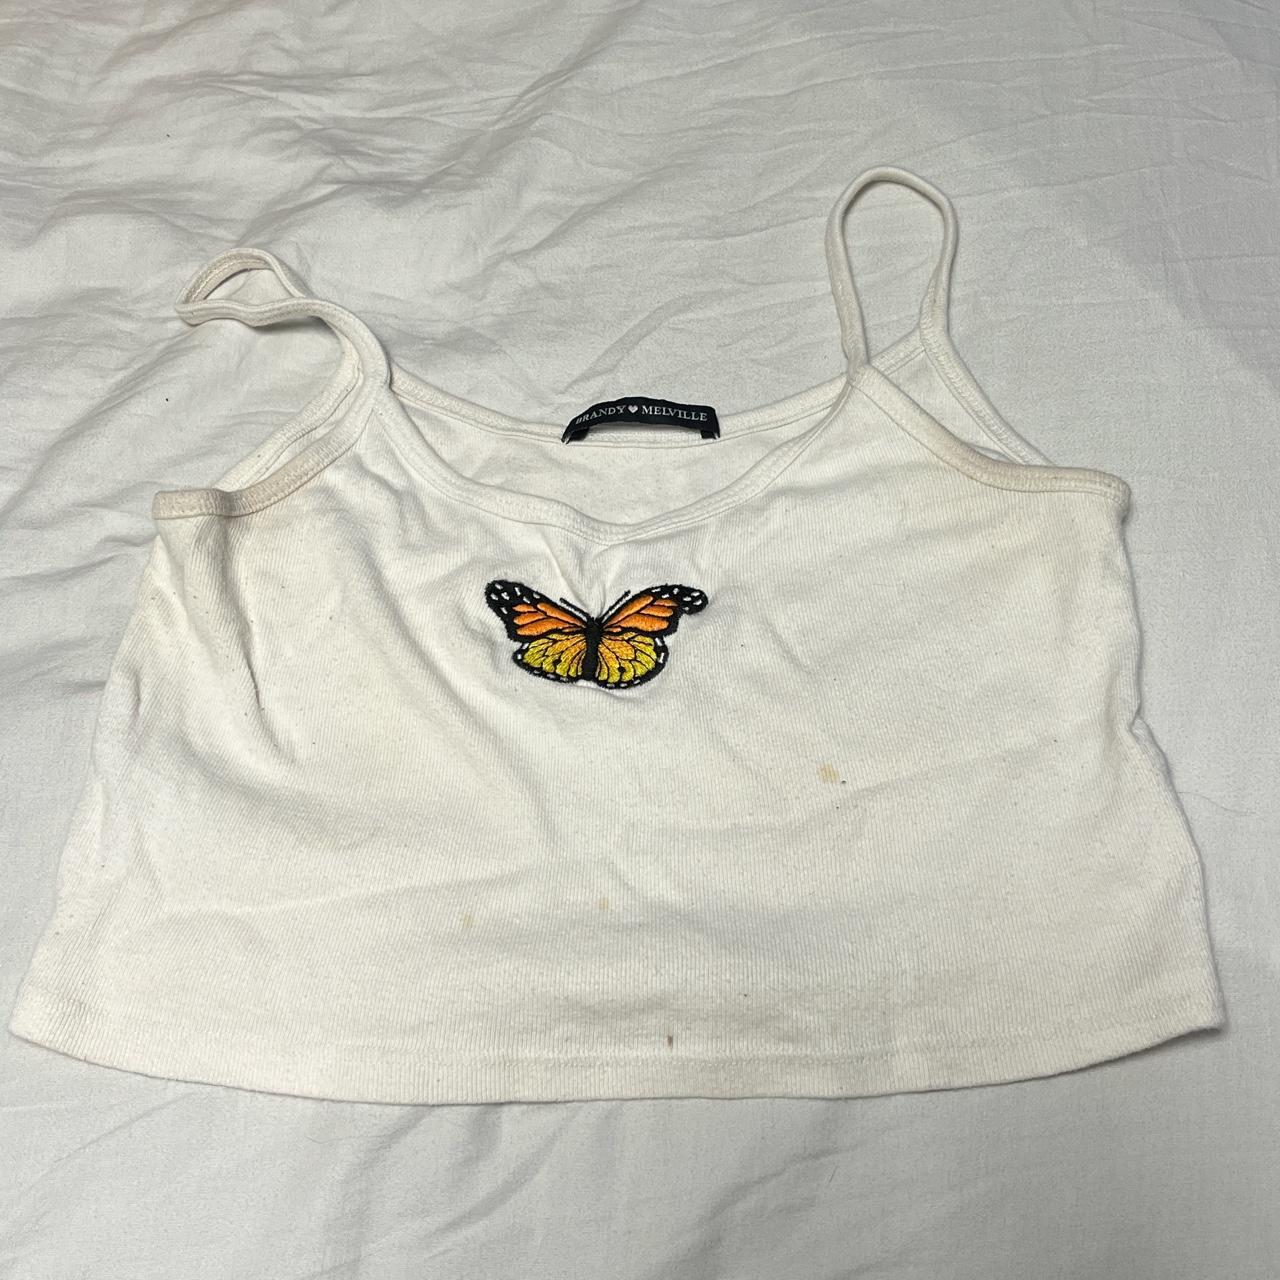 Brandy Melville Beyonca Butterfly Crop Tank White - $13 (27% Off